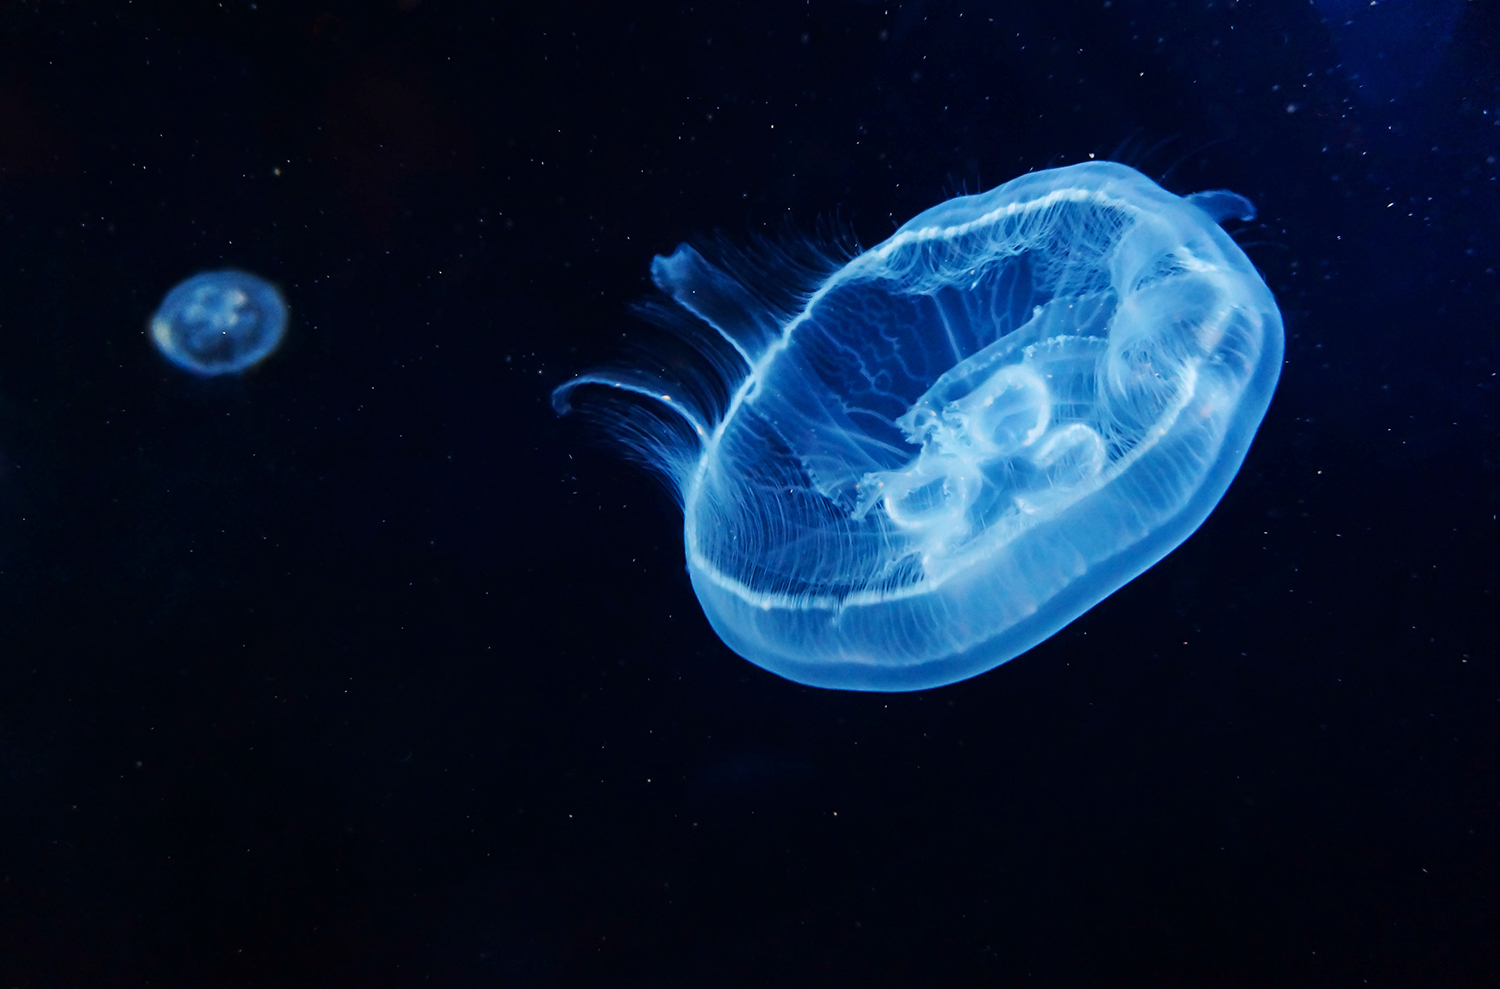 jellyfish glowing in dark water